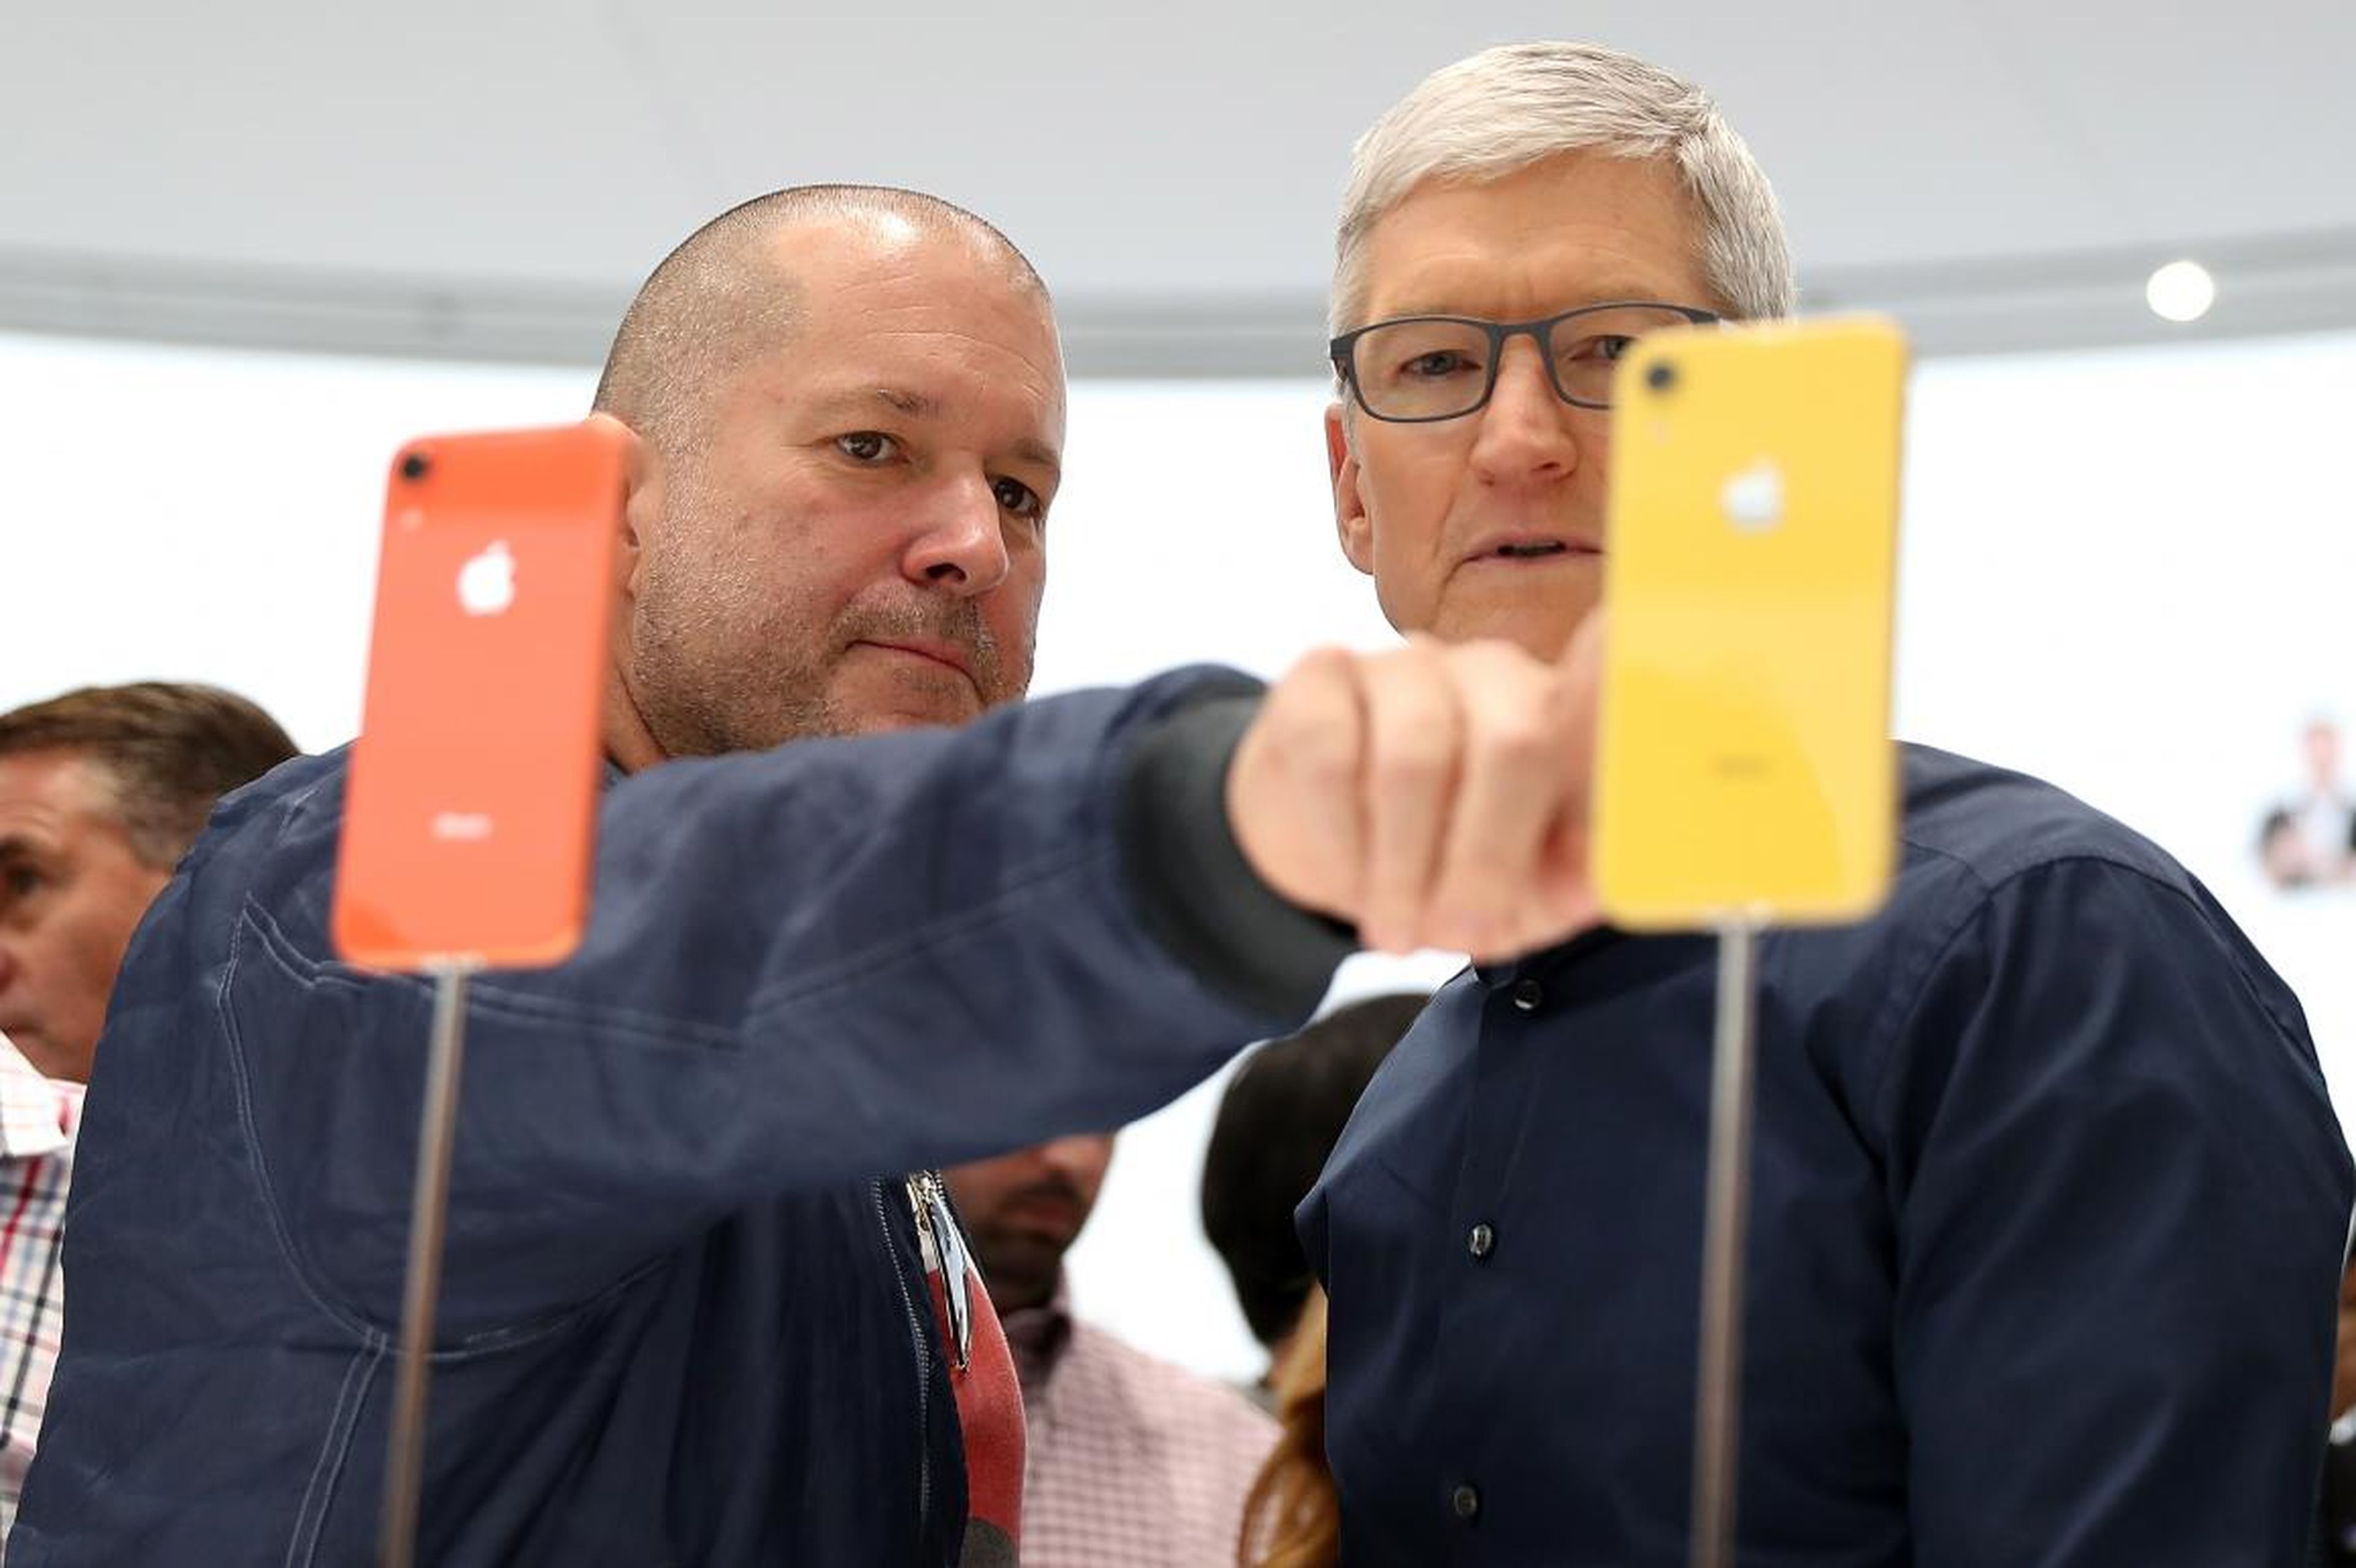 Apple's longtime design chief Jony Ive is leaving the company